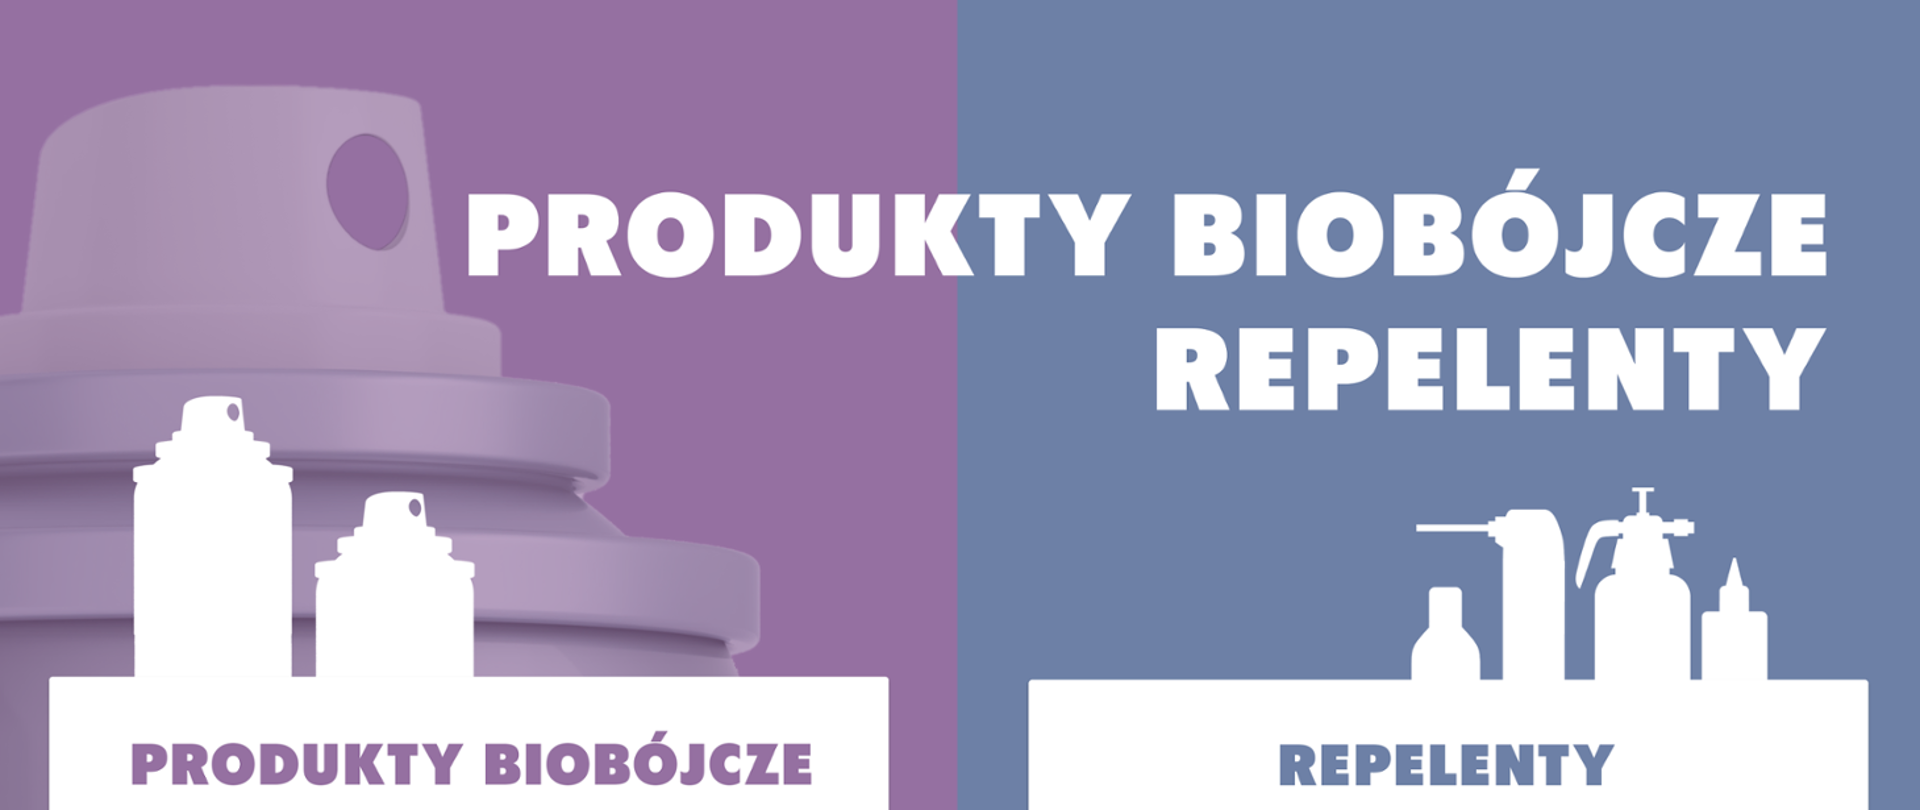 Produkty biobójcze - REPELENTY
